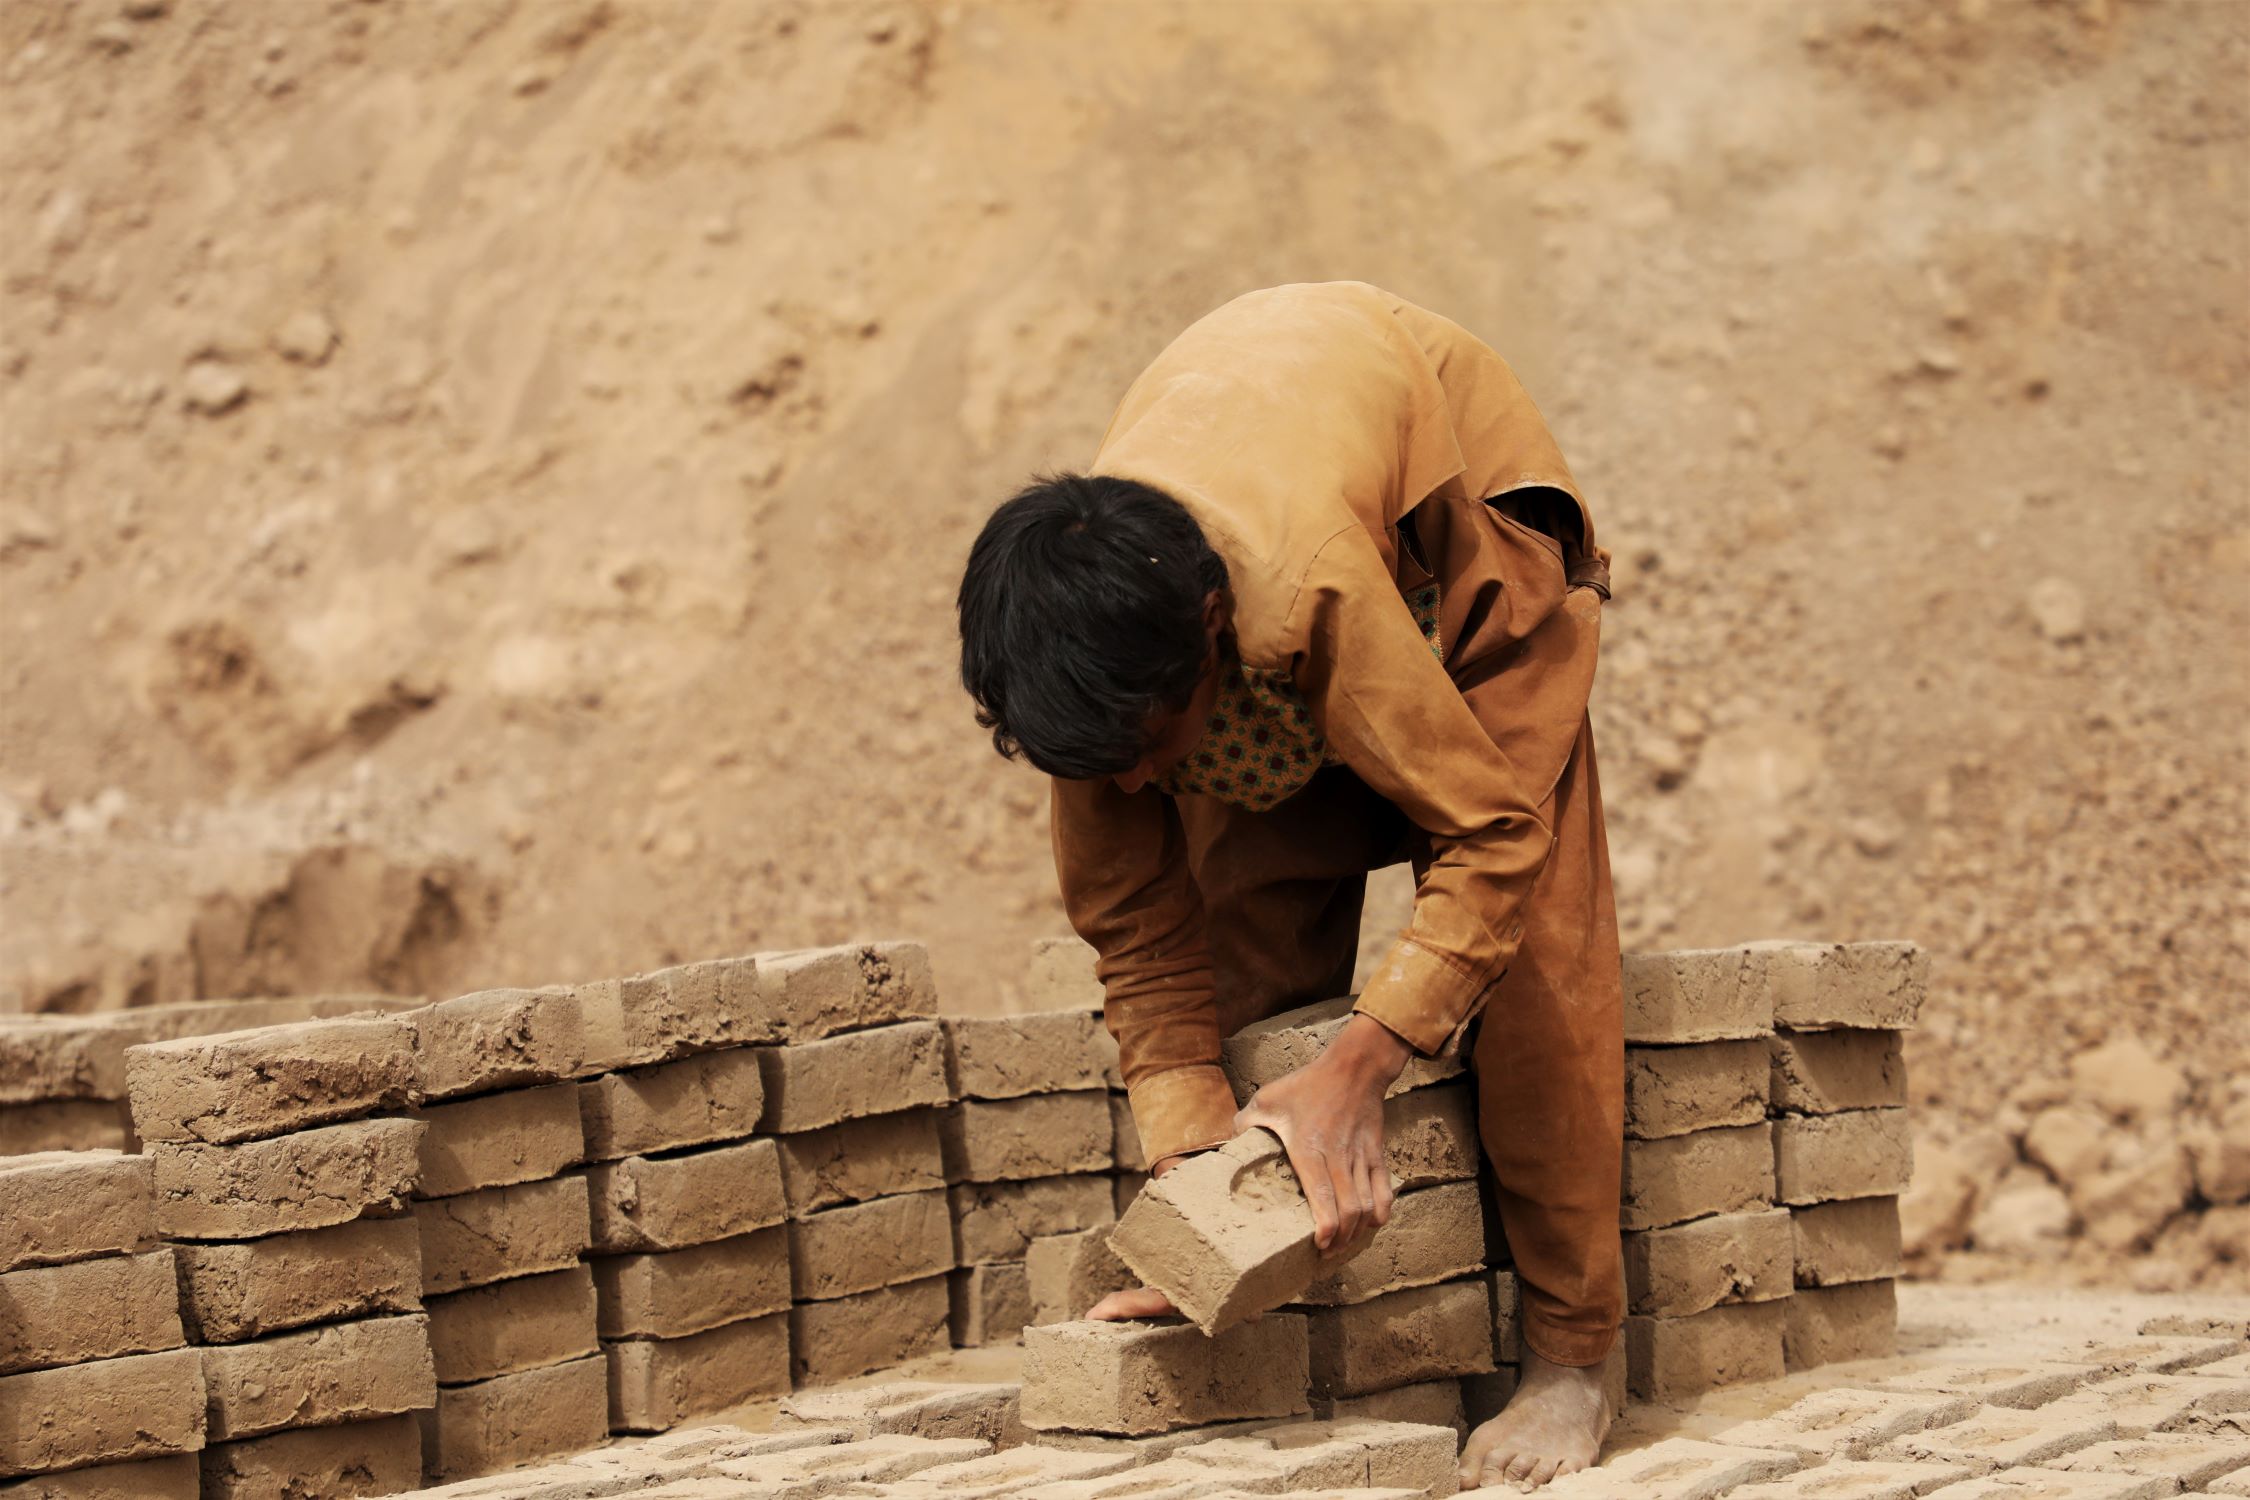 Boy lifting bricks in Afghanistan